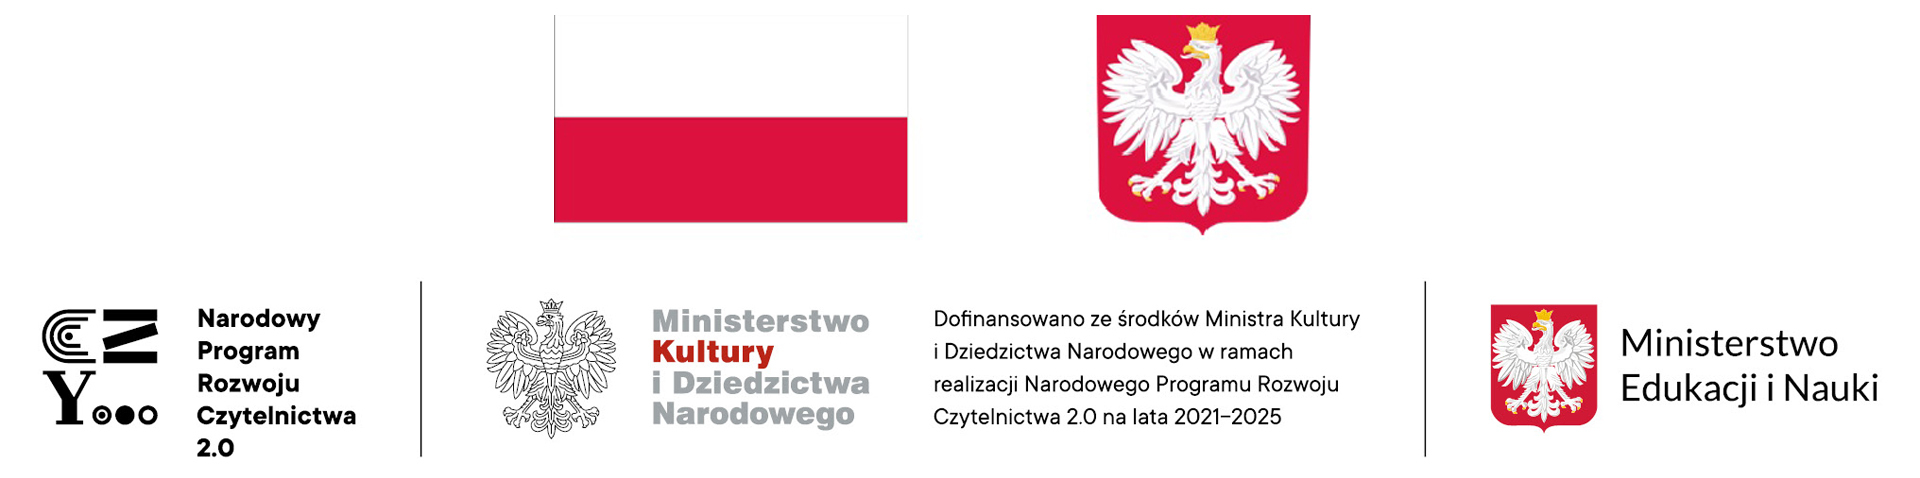 flaga i godło Polski.jpg